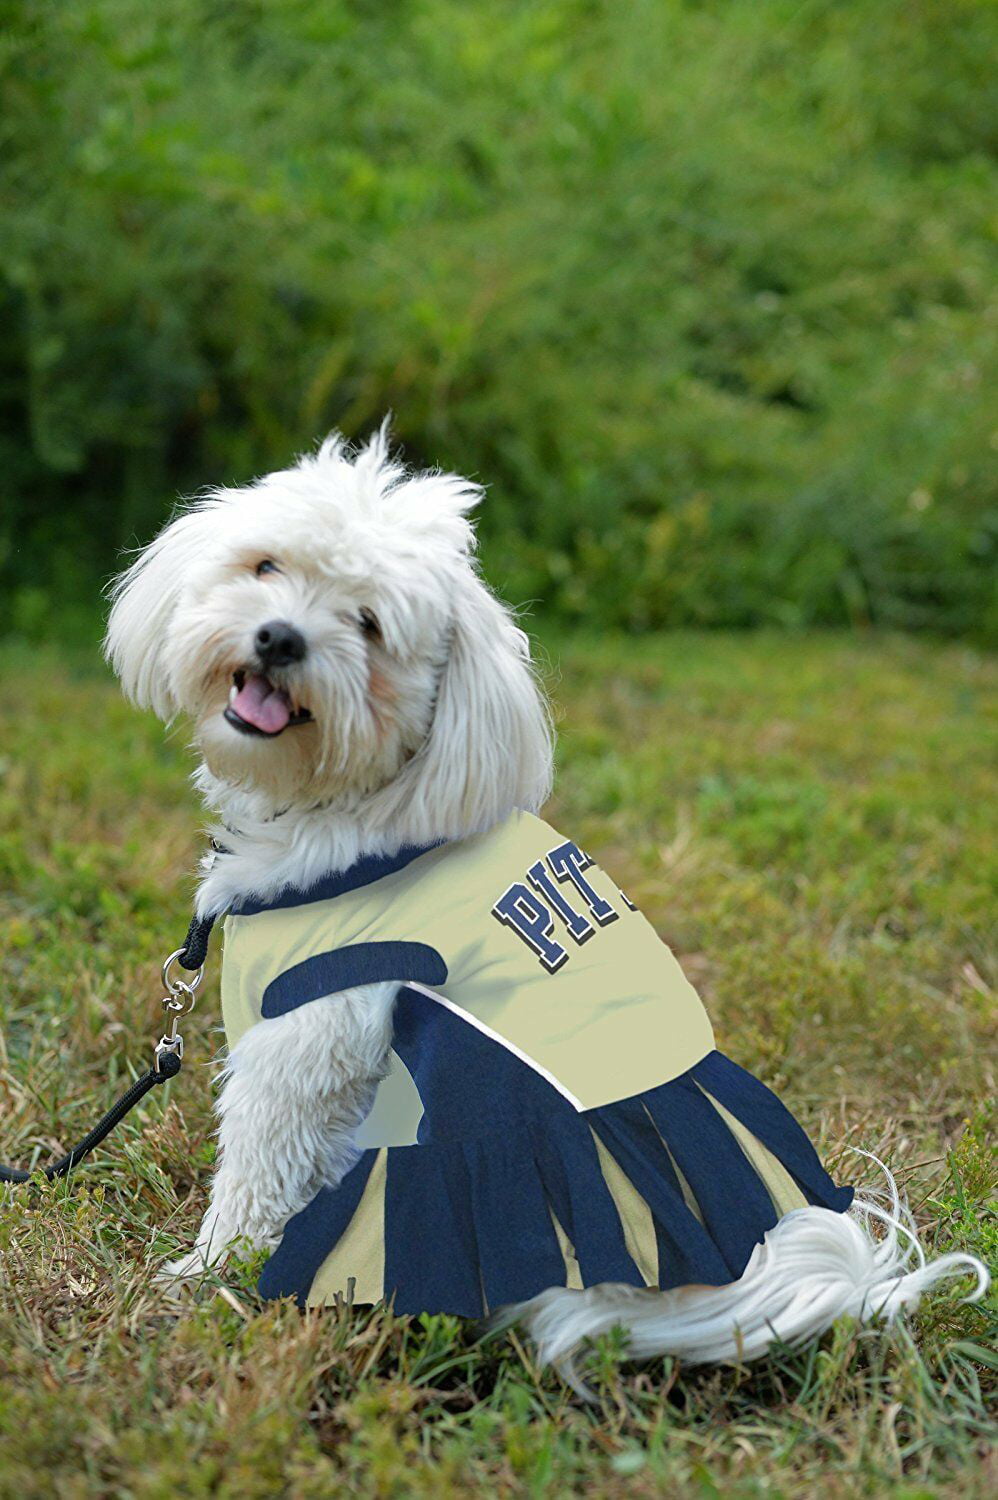 steelers dog cheerleader costume